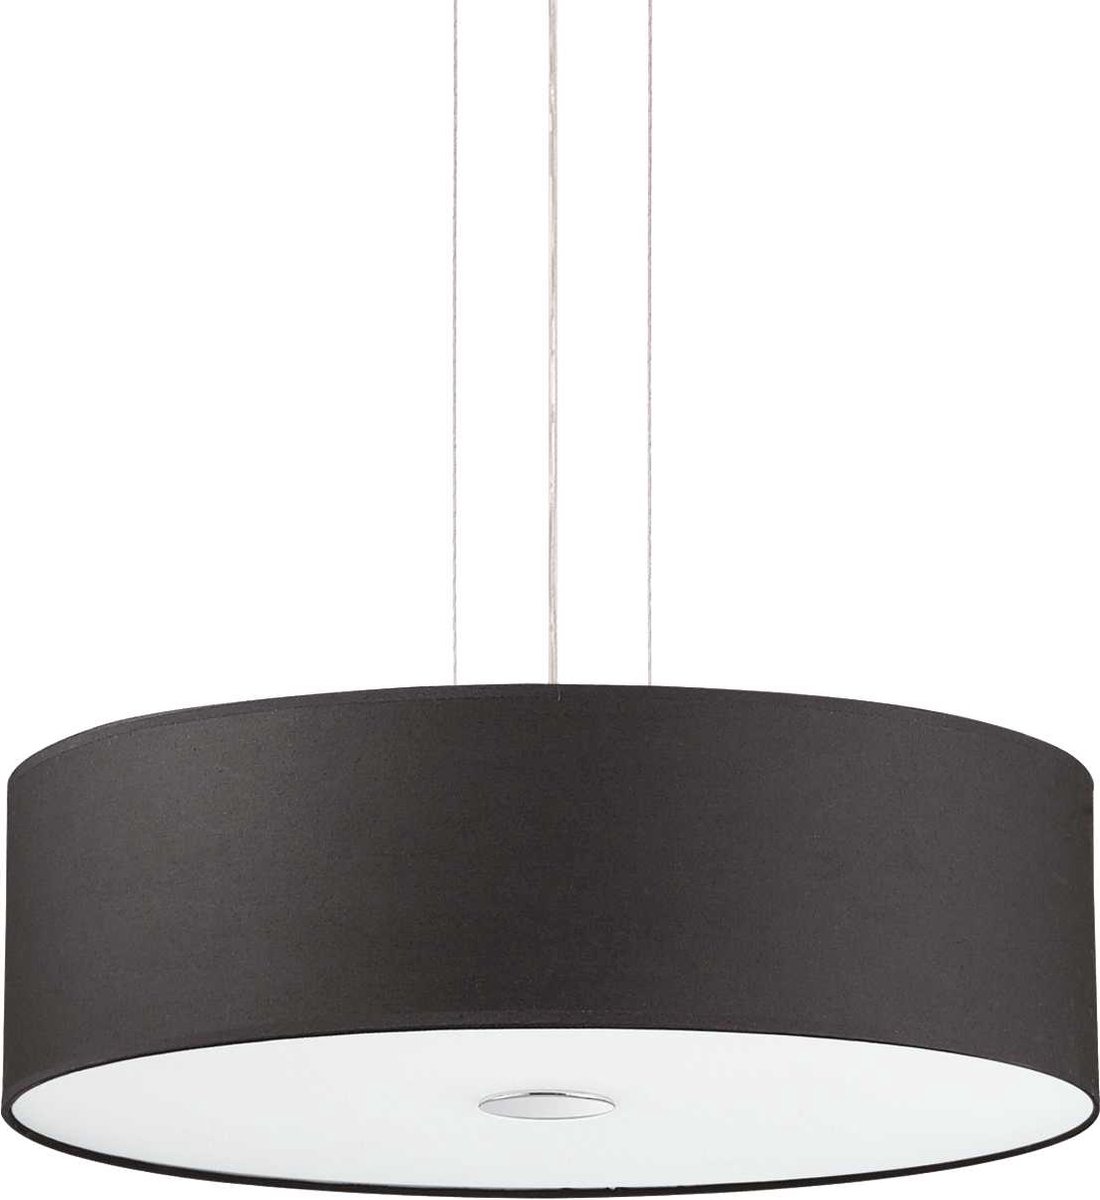 Ideal Your Lux - Hanglamp Modern - Glas - E27 - Voor Binnen - Lamp - Lampen - Woonkamer - Eetkamer - Slaapkamer - Chroom